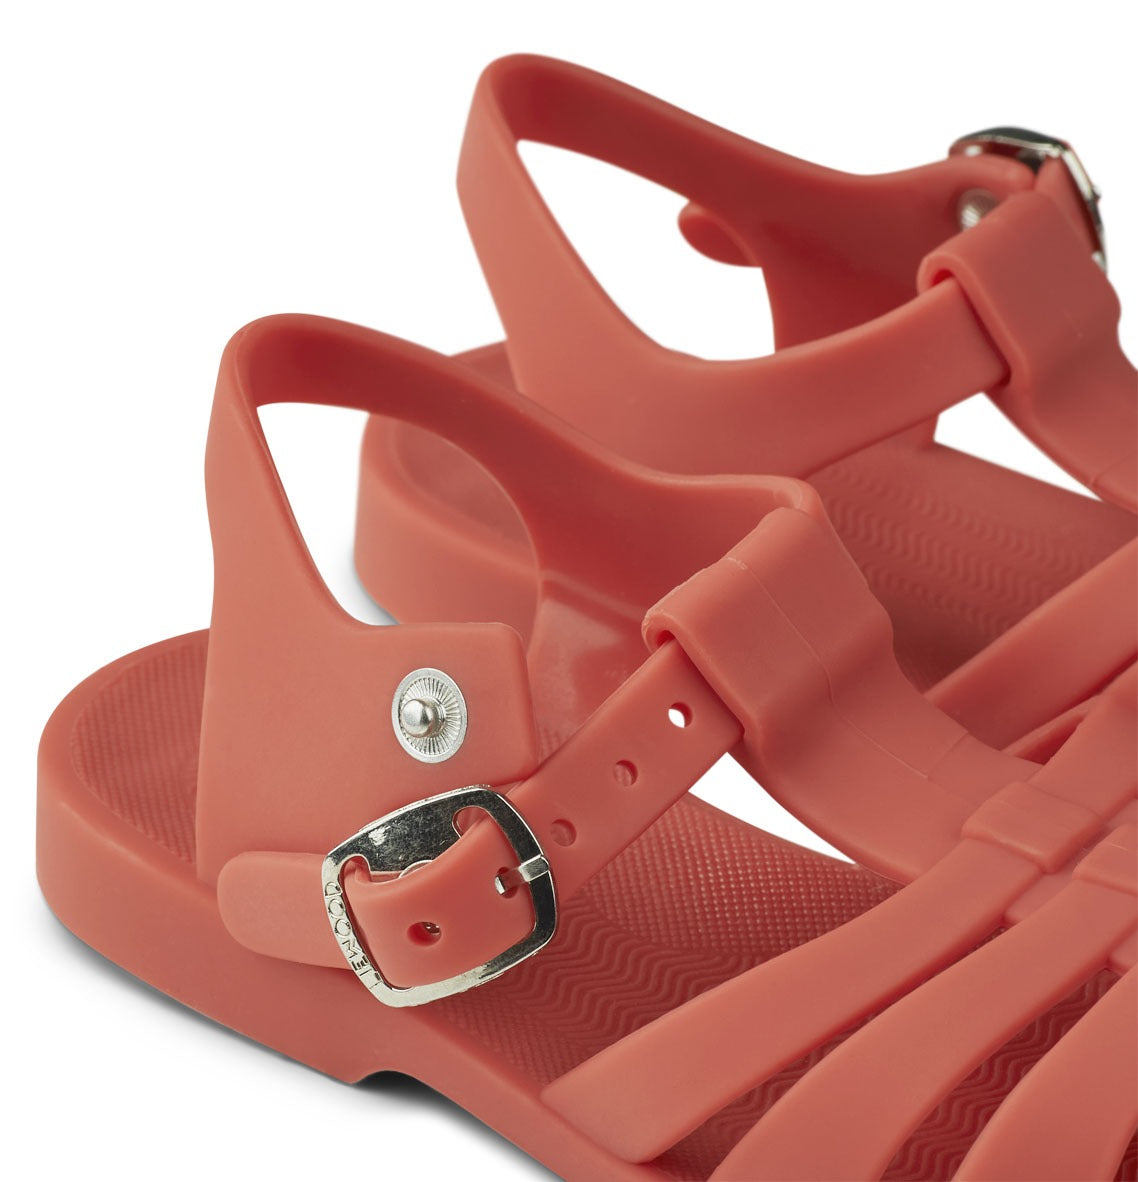 BRE Beach Sandals - Apple Red